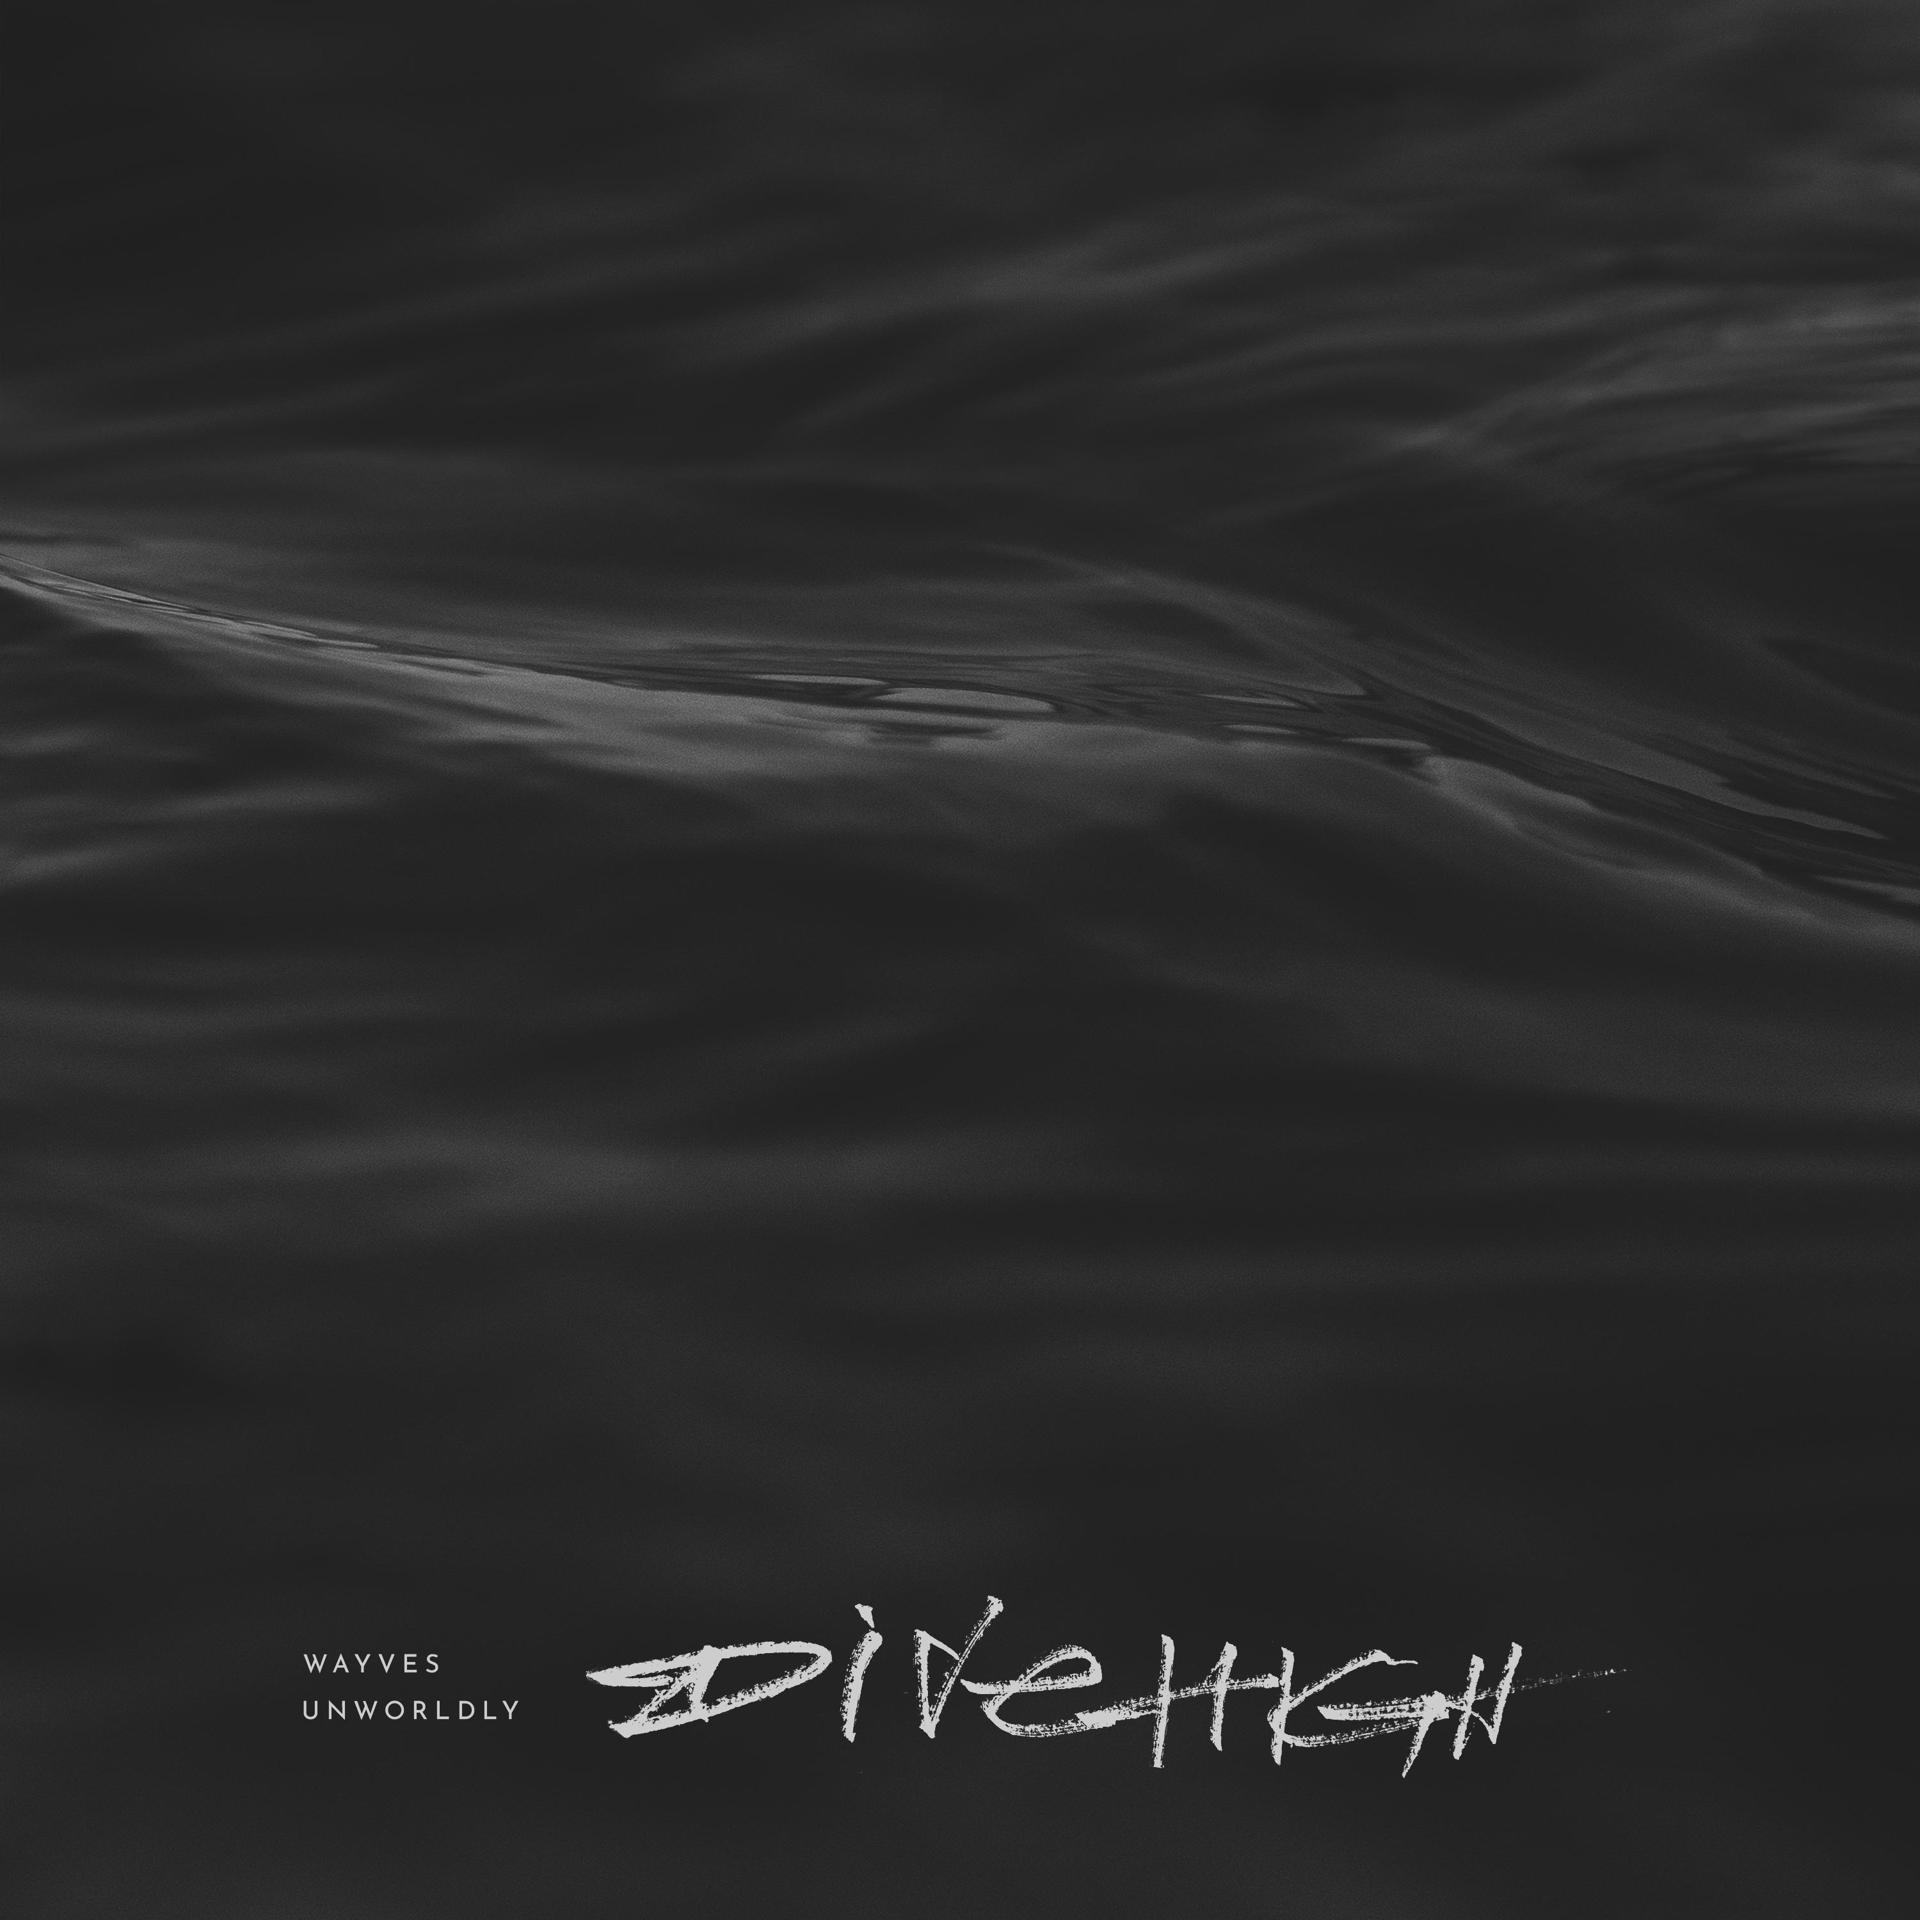 Постер альбома Dive High